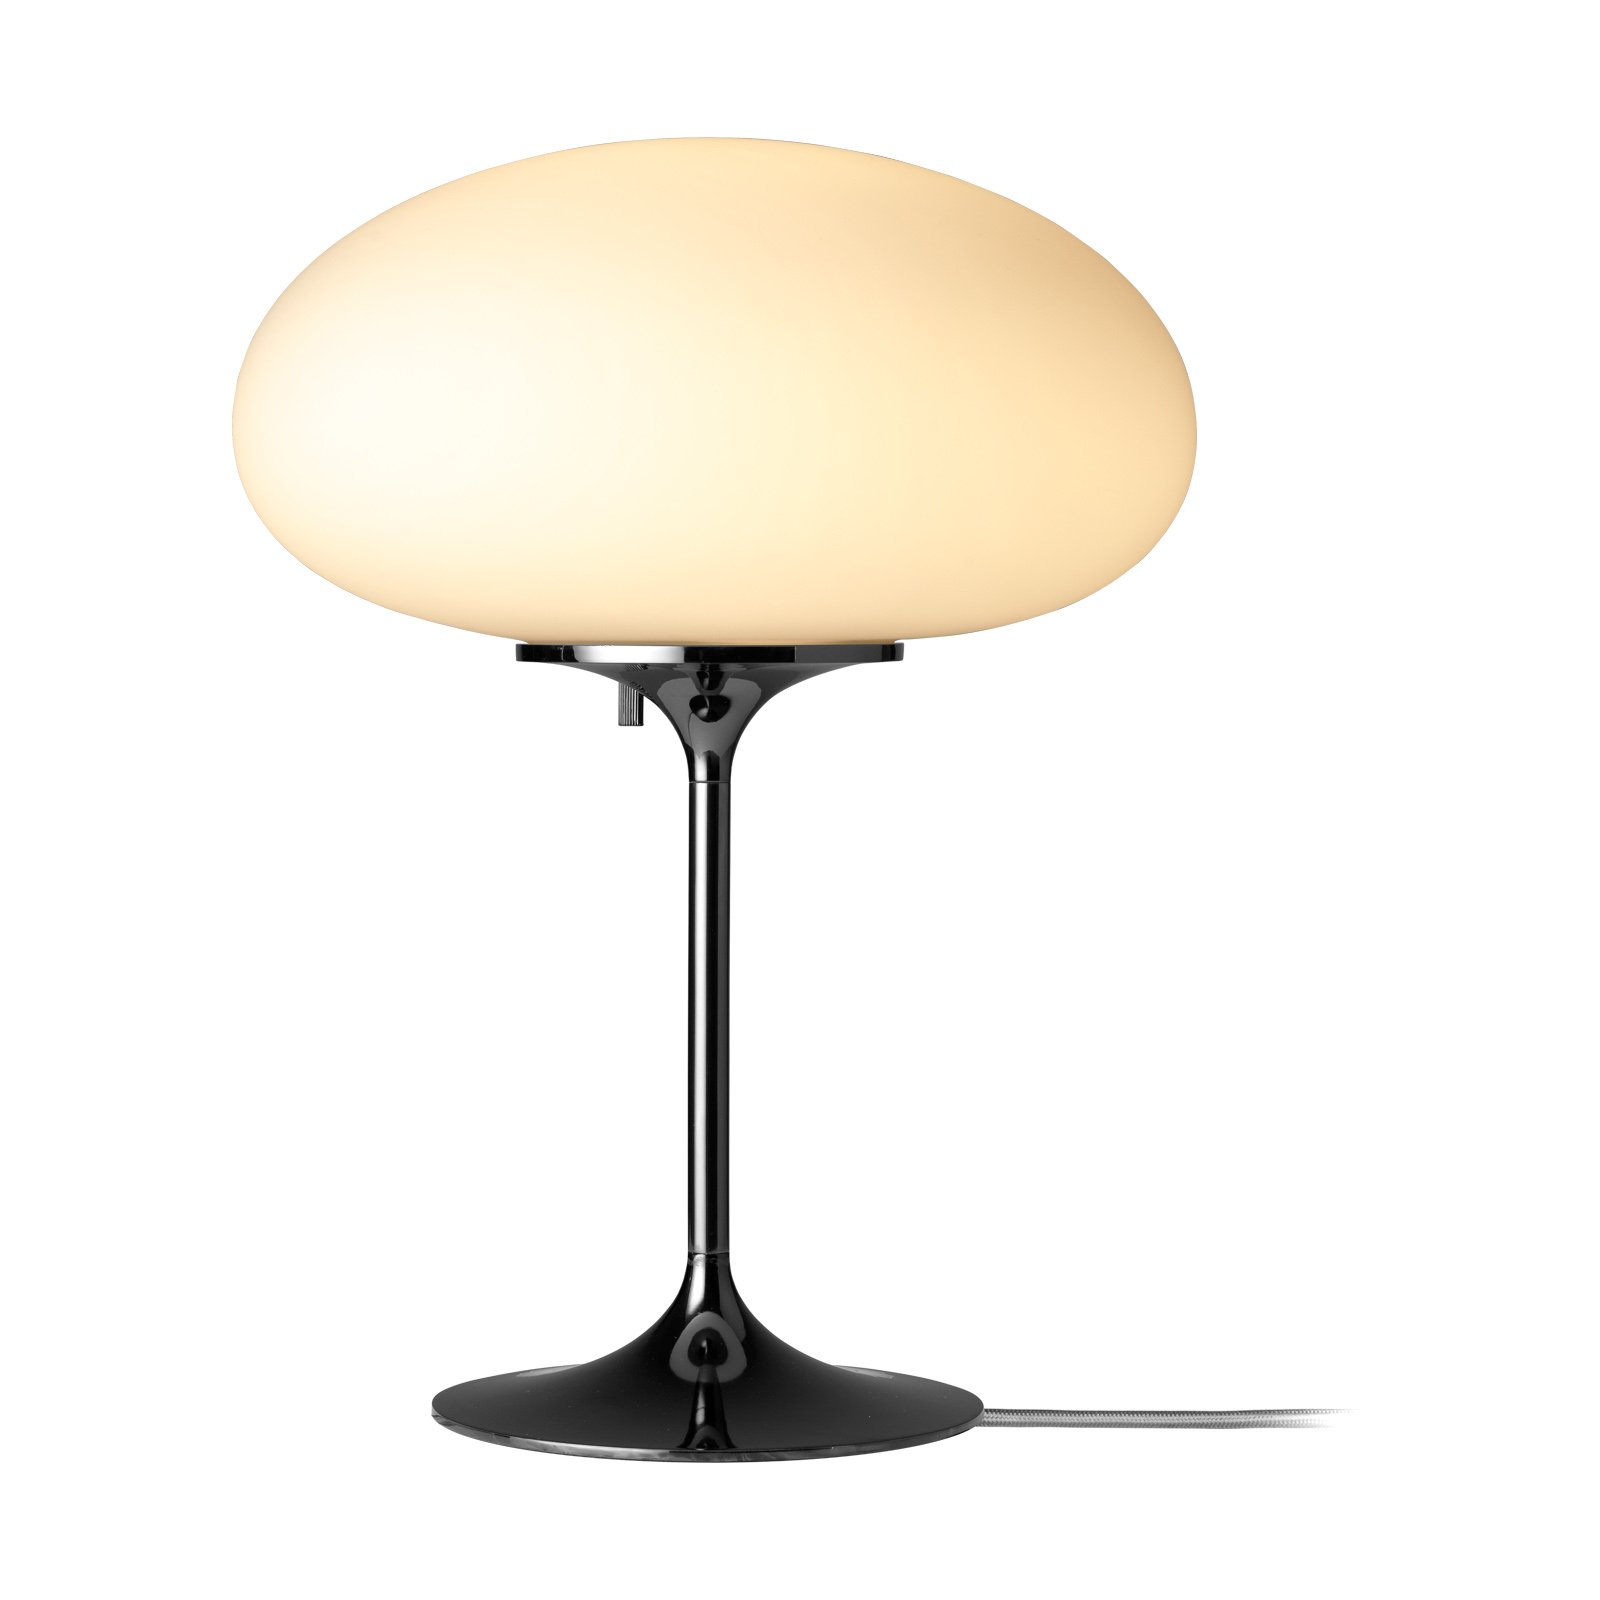 GUBI Stemlite lampe à poser, noire-chromée, 42 cm